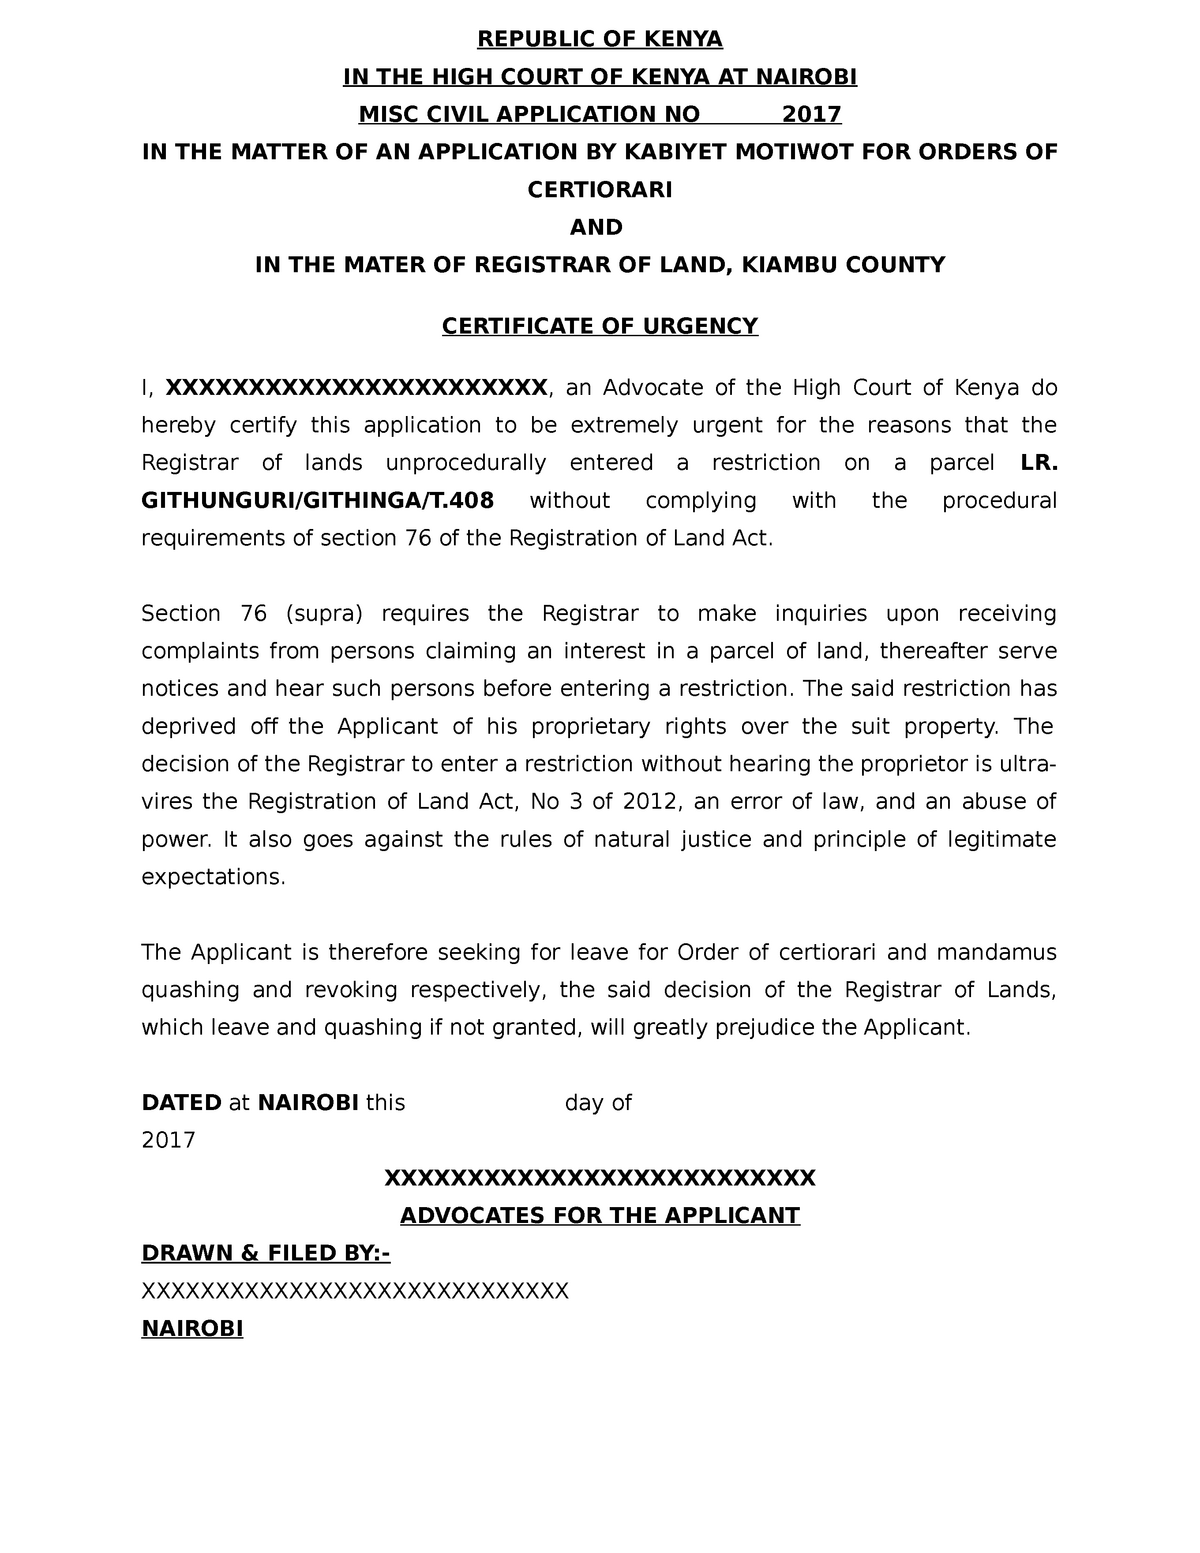 Application of Judicial Review IN THE HIGH COURT OF KENYA AT NAIROBI